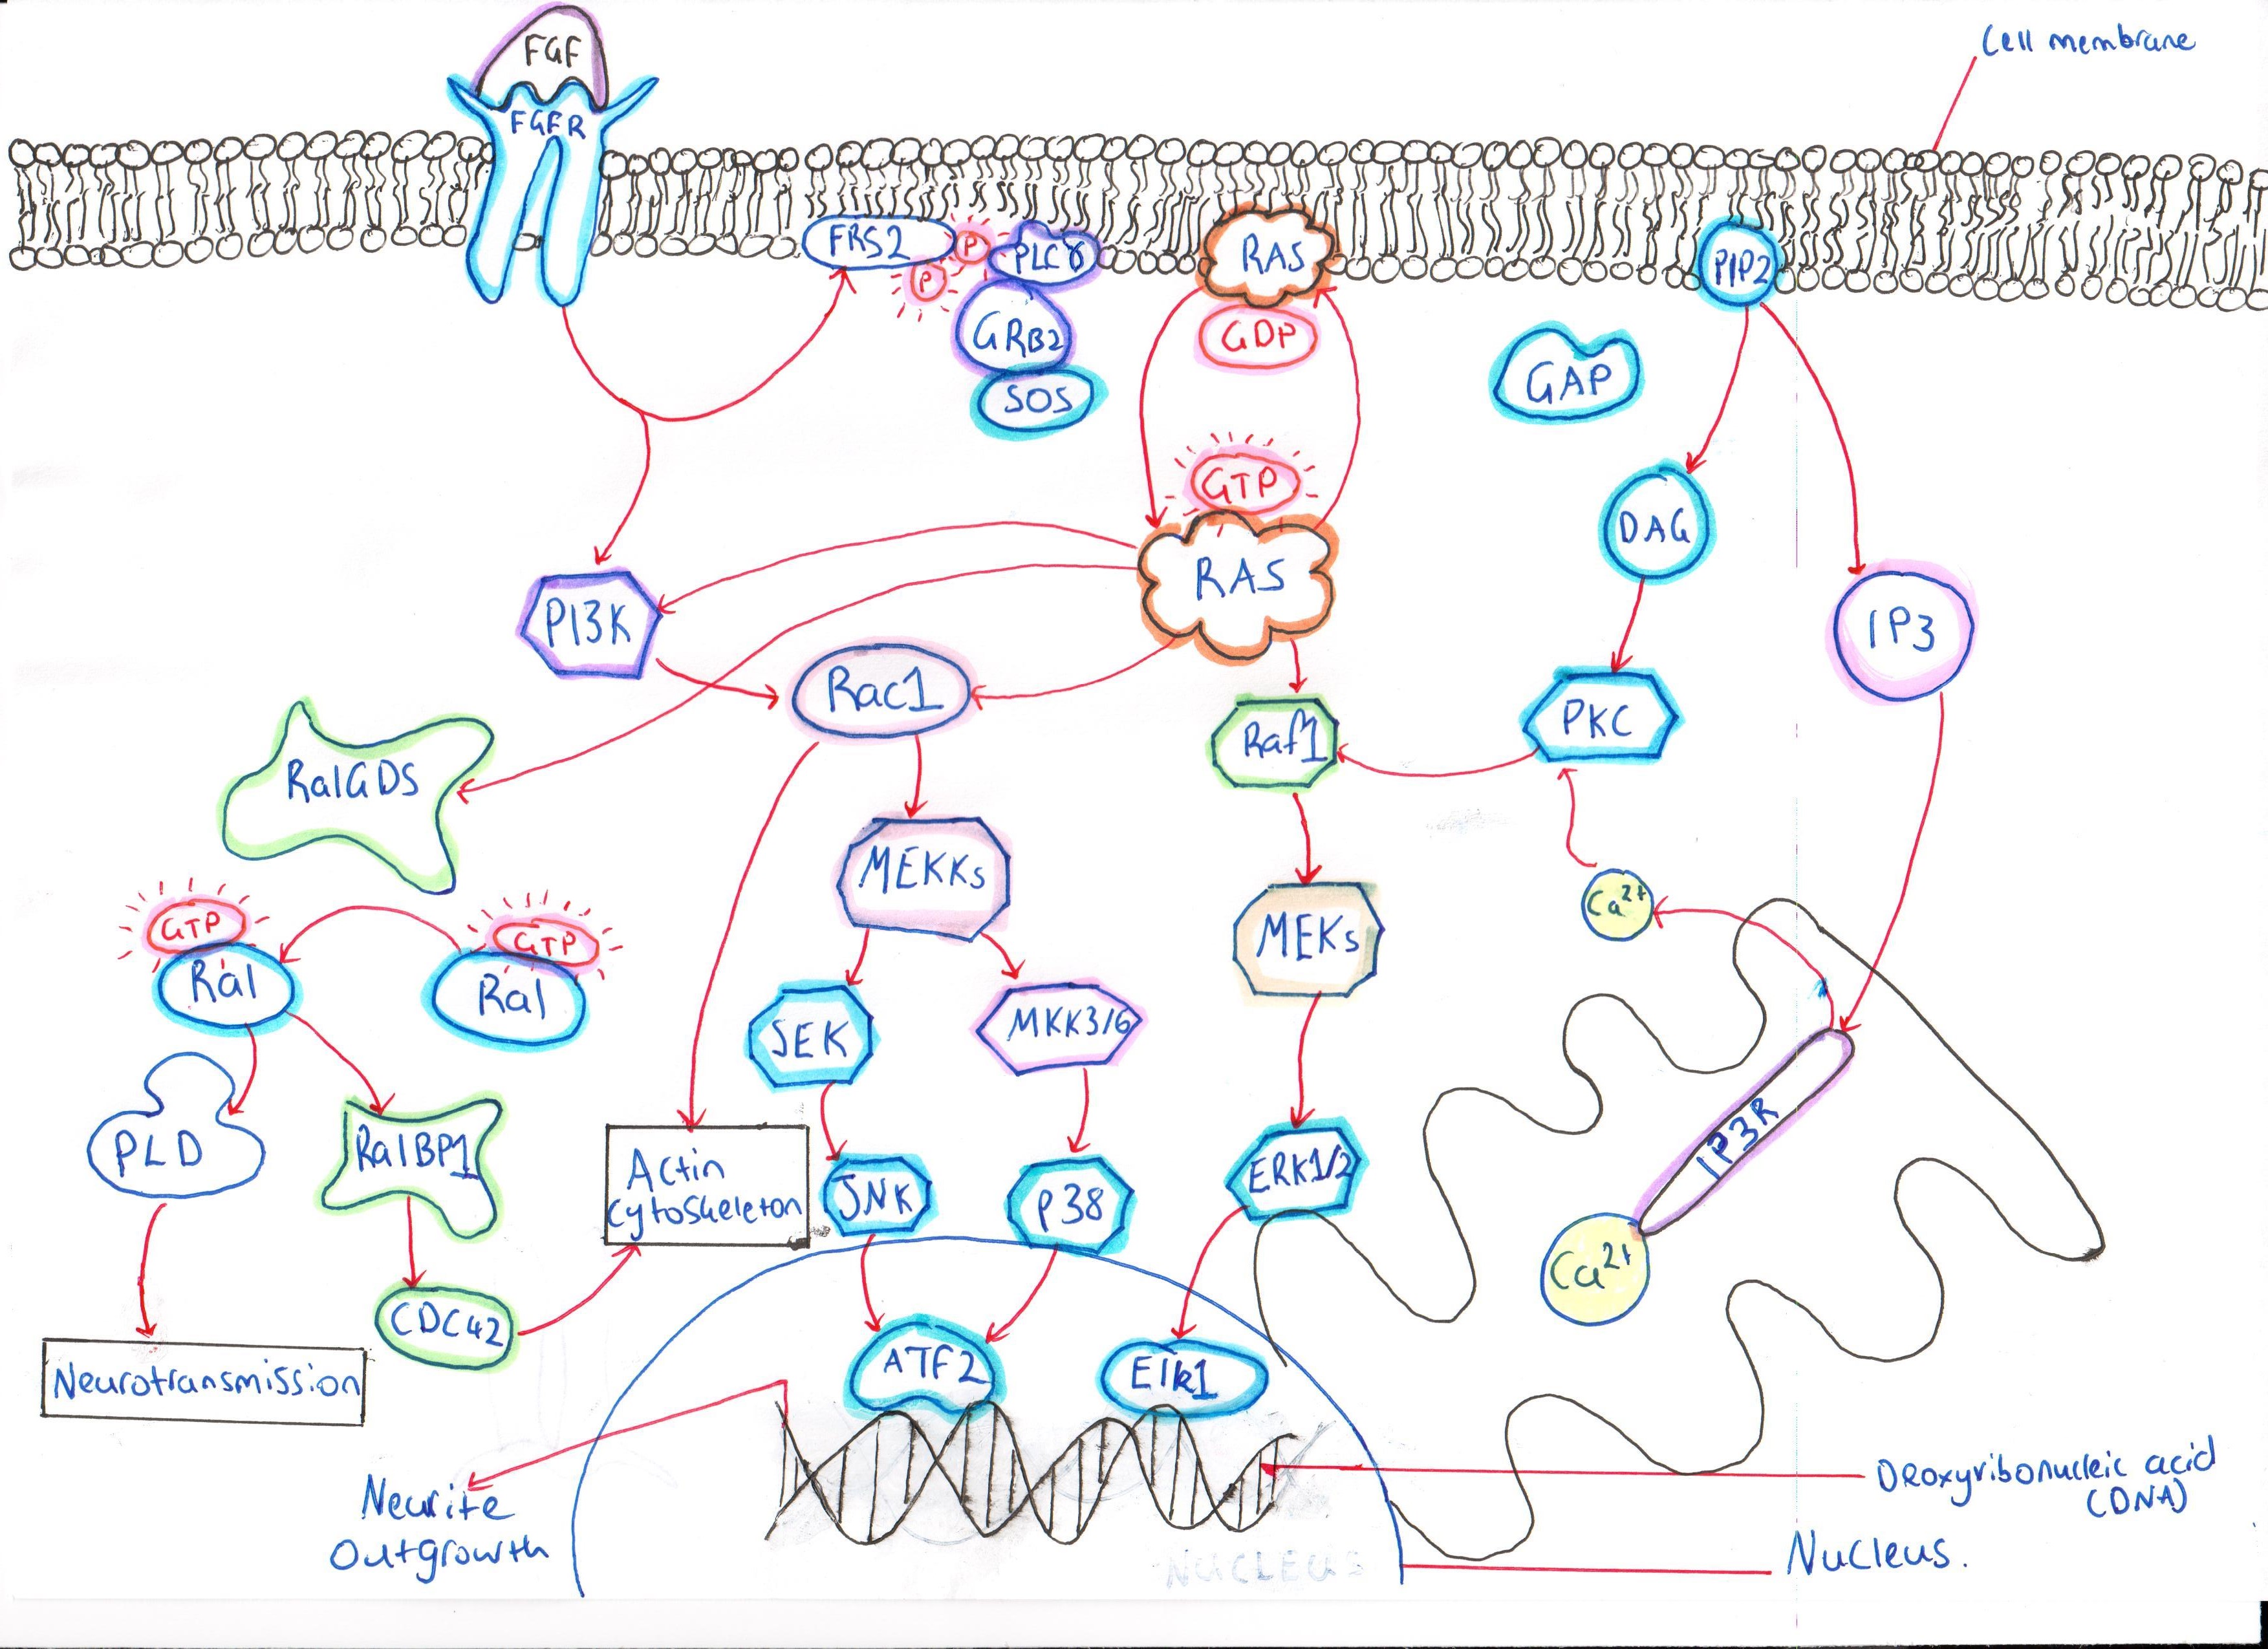 FGF signalling pathway.jpg